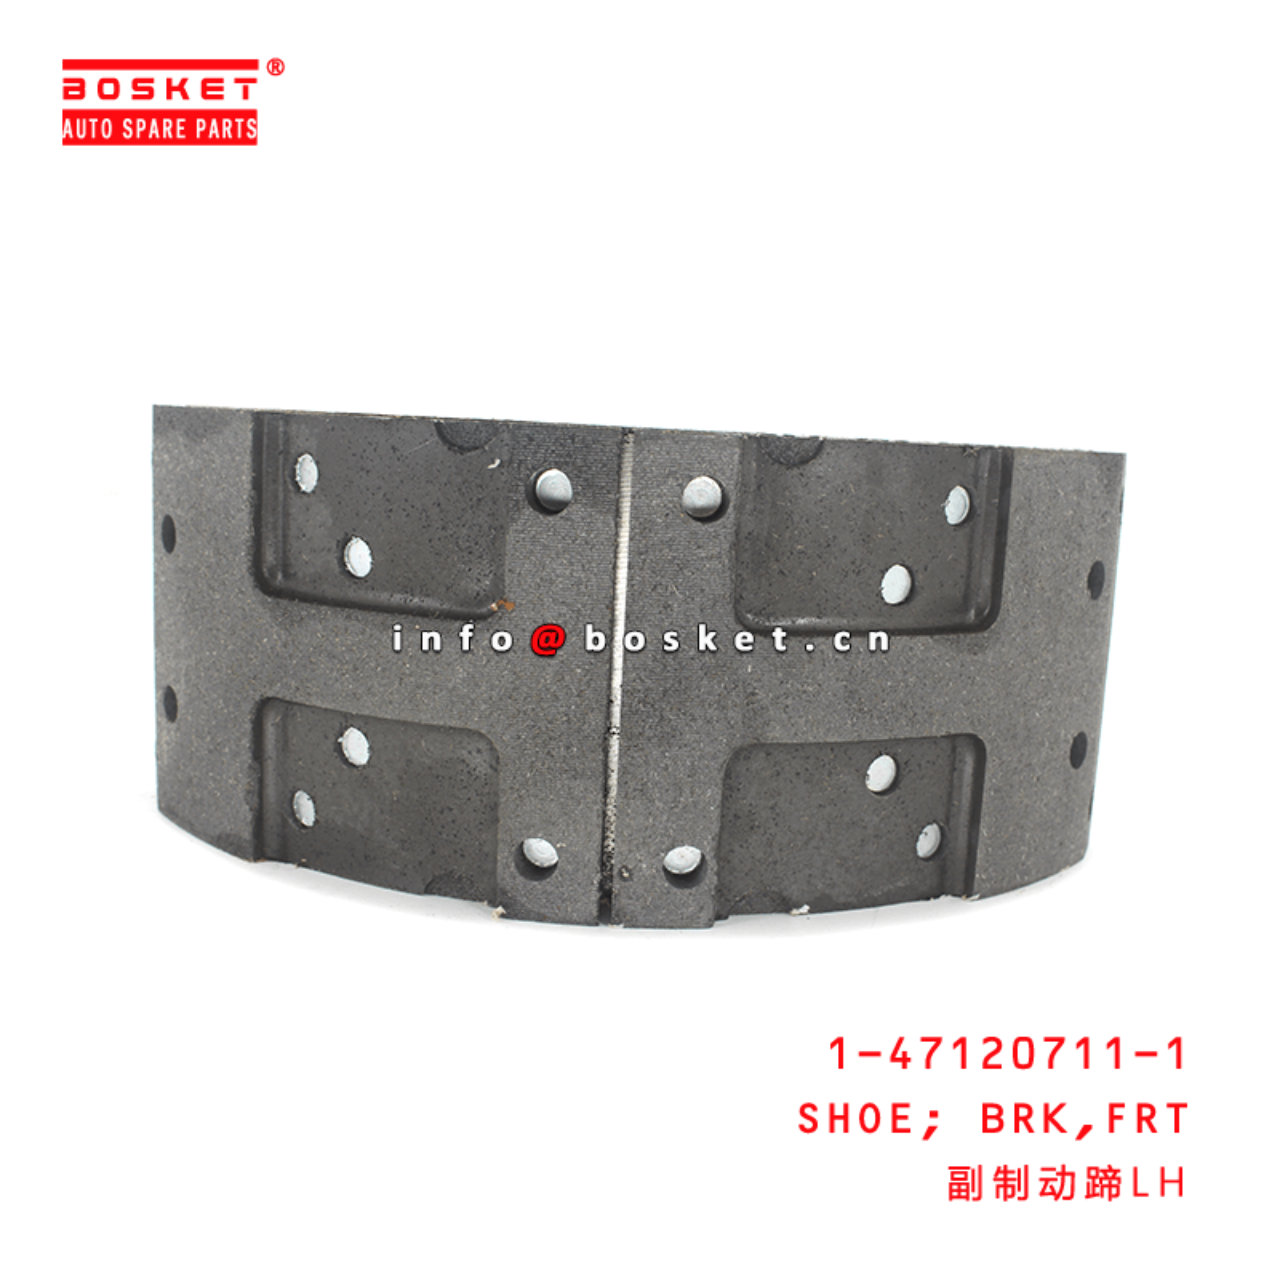 1-47120711-1 Front Brake Shoe 1471207111 Suitable for ISUZU FTR